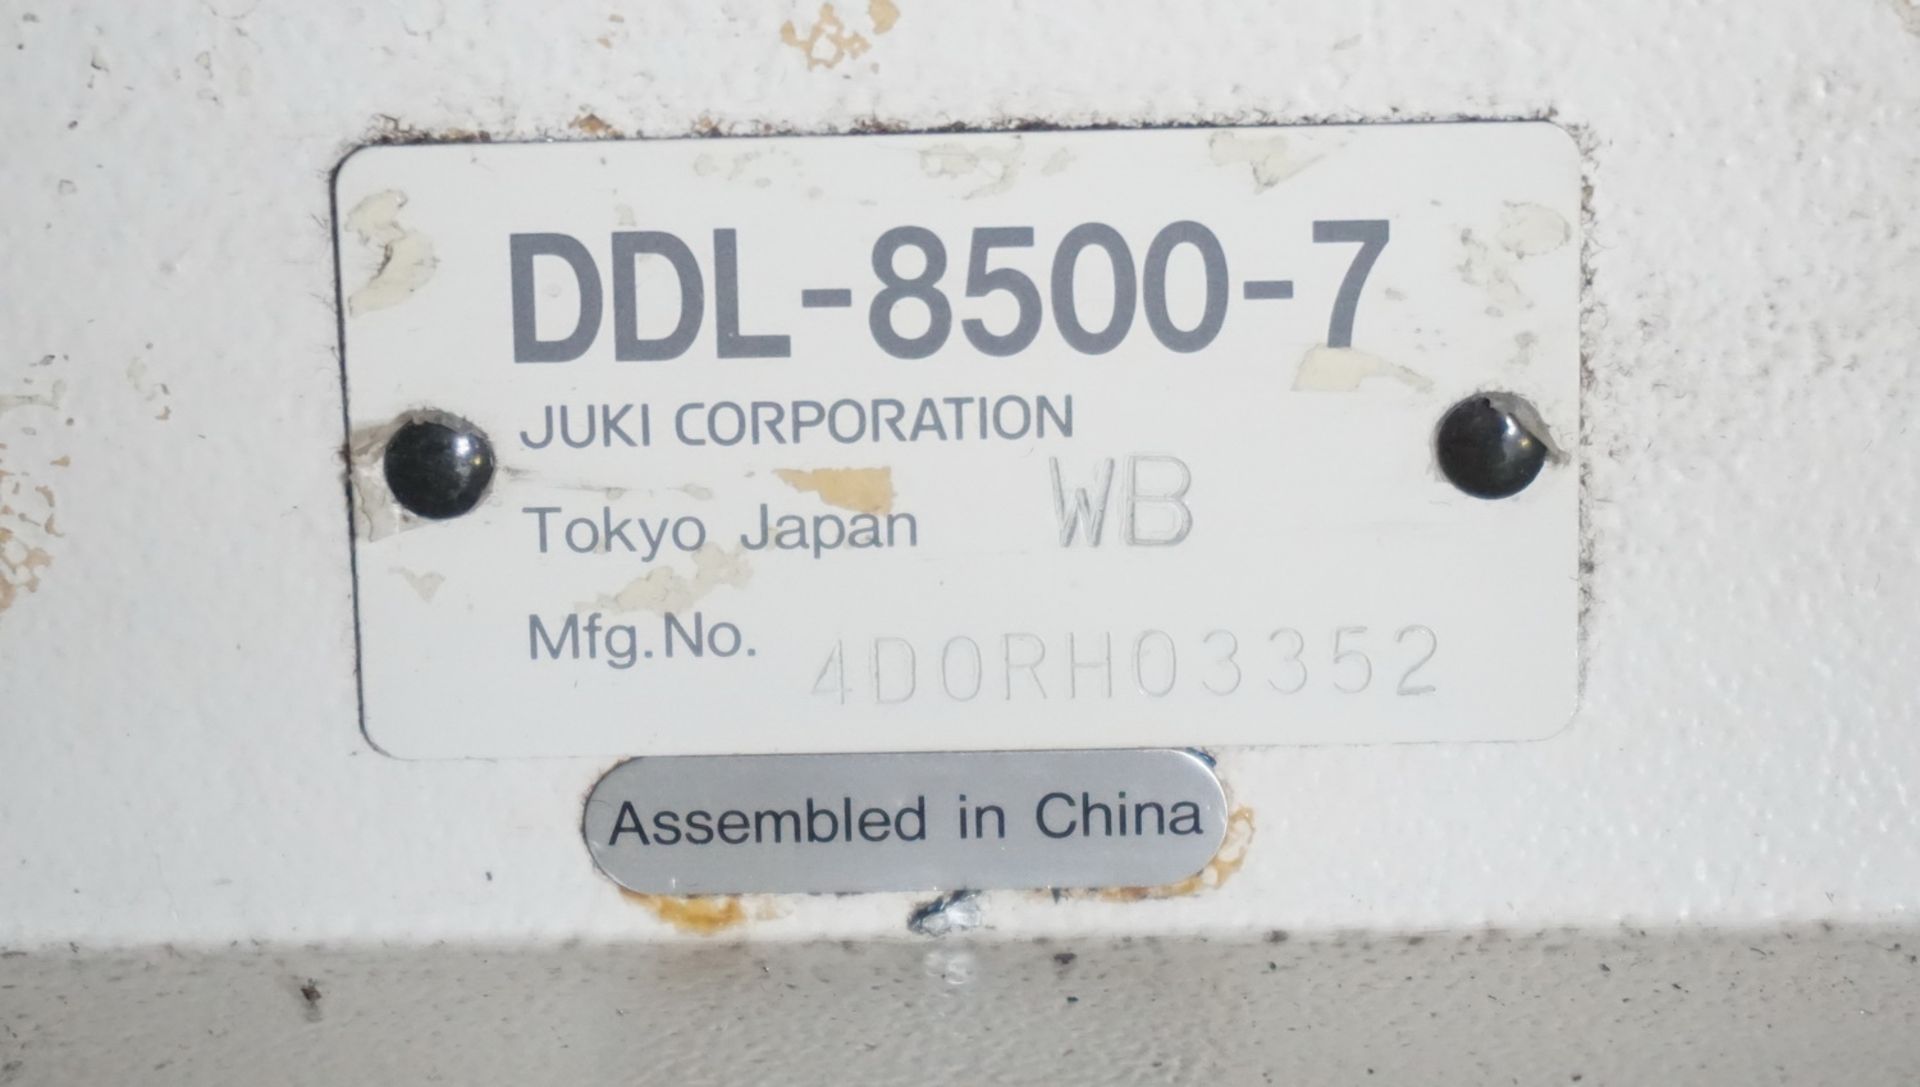 JUKI DDL-8500-7 LOCKSTITCH SINGLE NEEDLE MACHINE, S/N 4D0RH03352 (200-240V, 3PH) (LOCATED @ 101 - Image 6 of 6